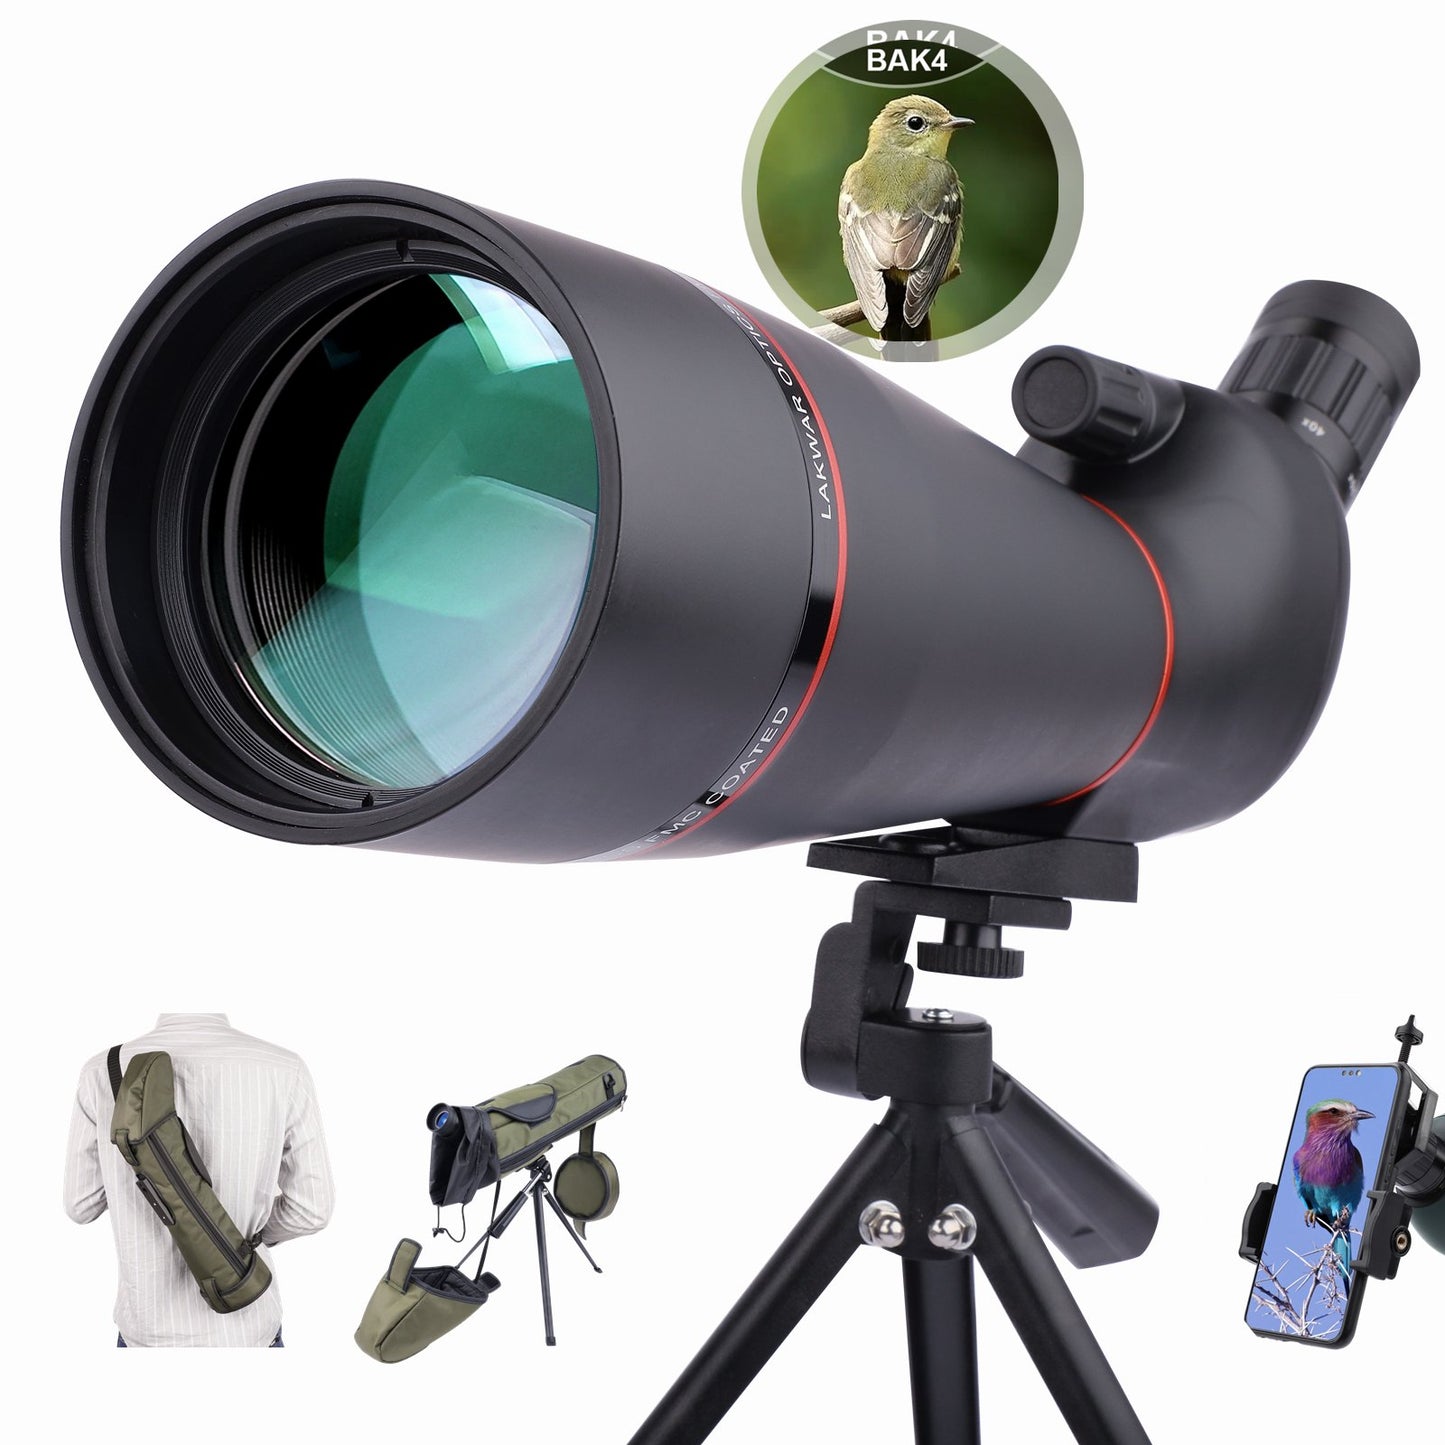 LAKWAR 20-60x80mm HD Spotting Scope for Bird Watching, Monocular Telescope BAK4 45-Degree Angled Eyepiece with Carrying Bag,Phone Photo Mount for Hunting Target Shooting Wildlife Scenery